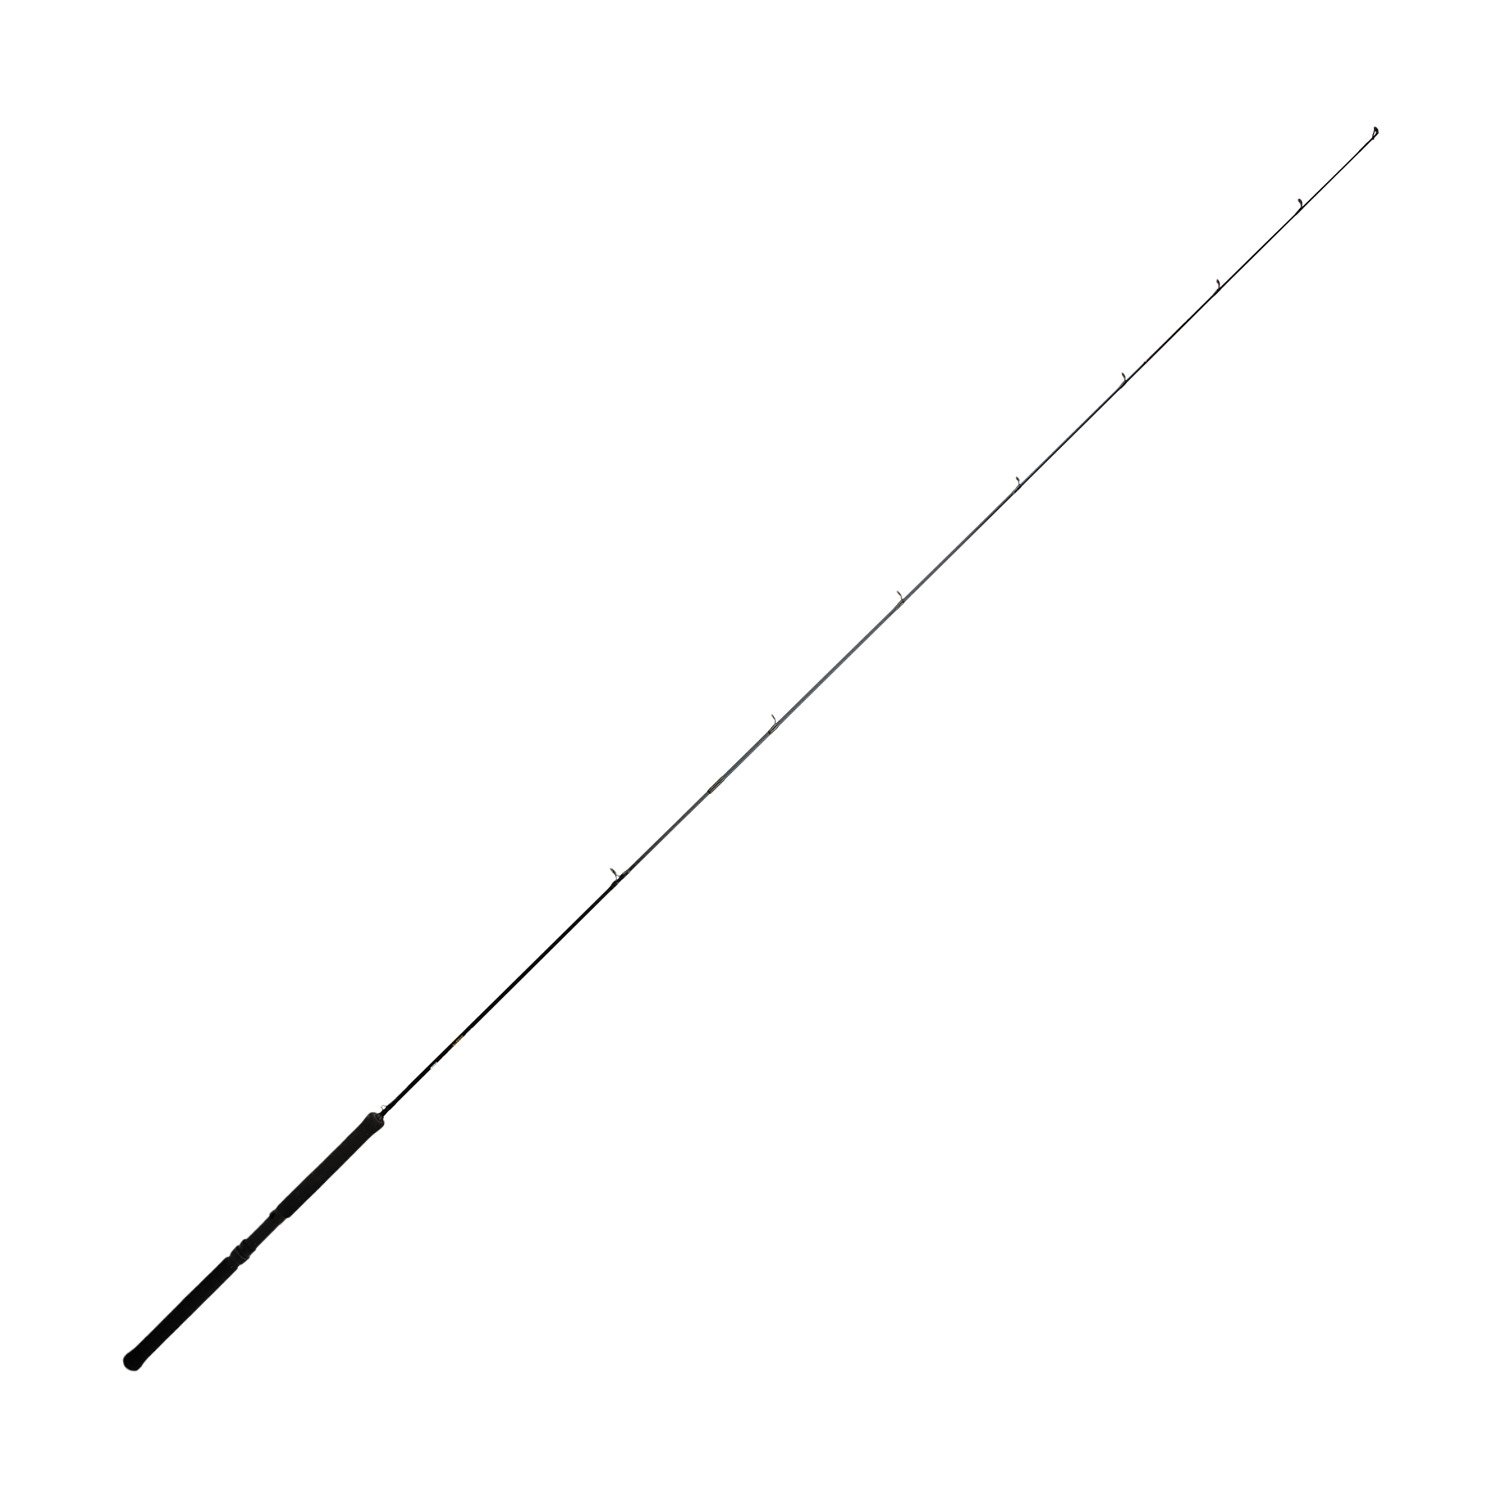 B 'n' M Buck's 8' Freshwater Graphite Panfish Rod